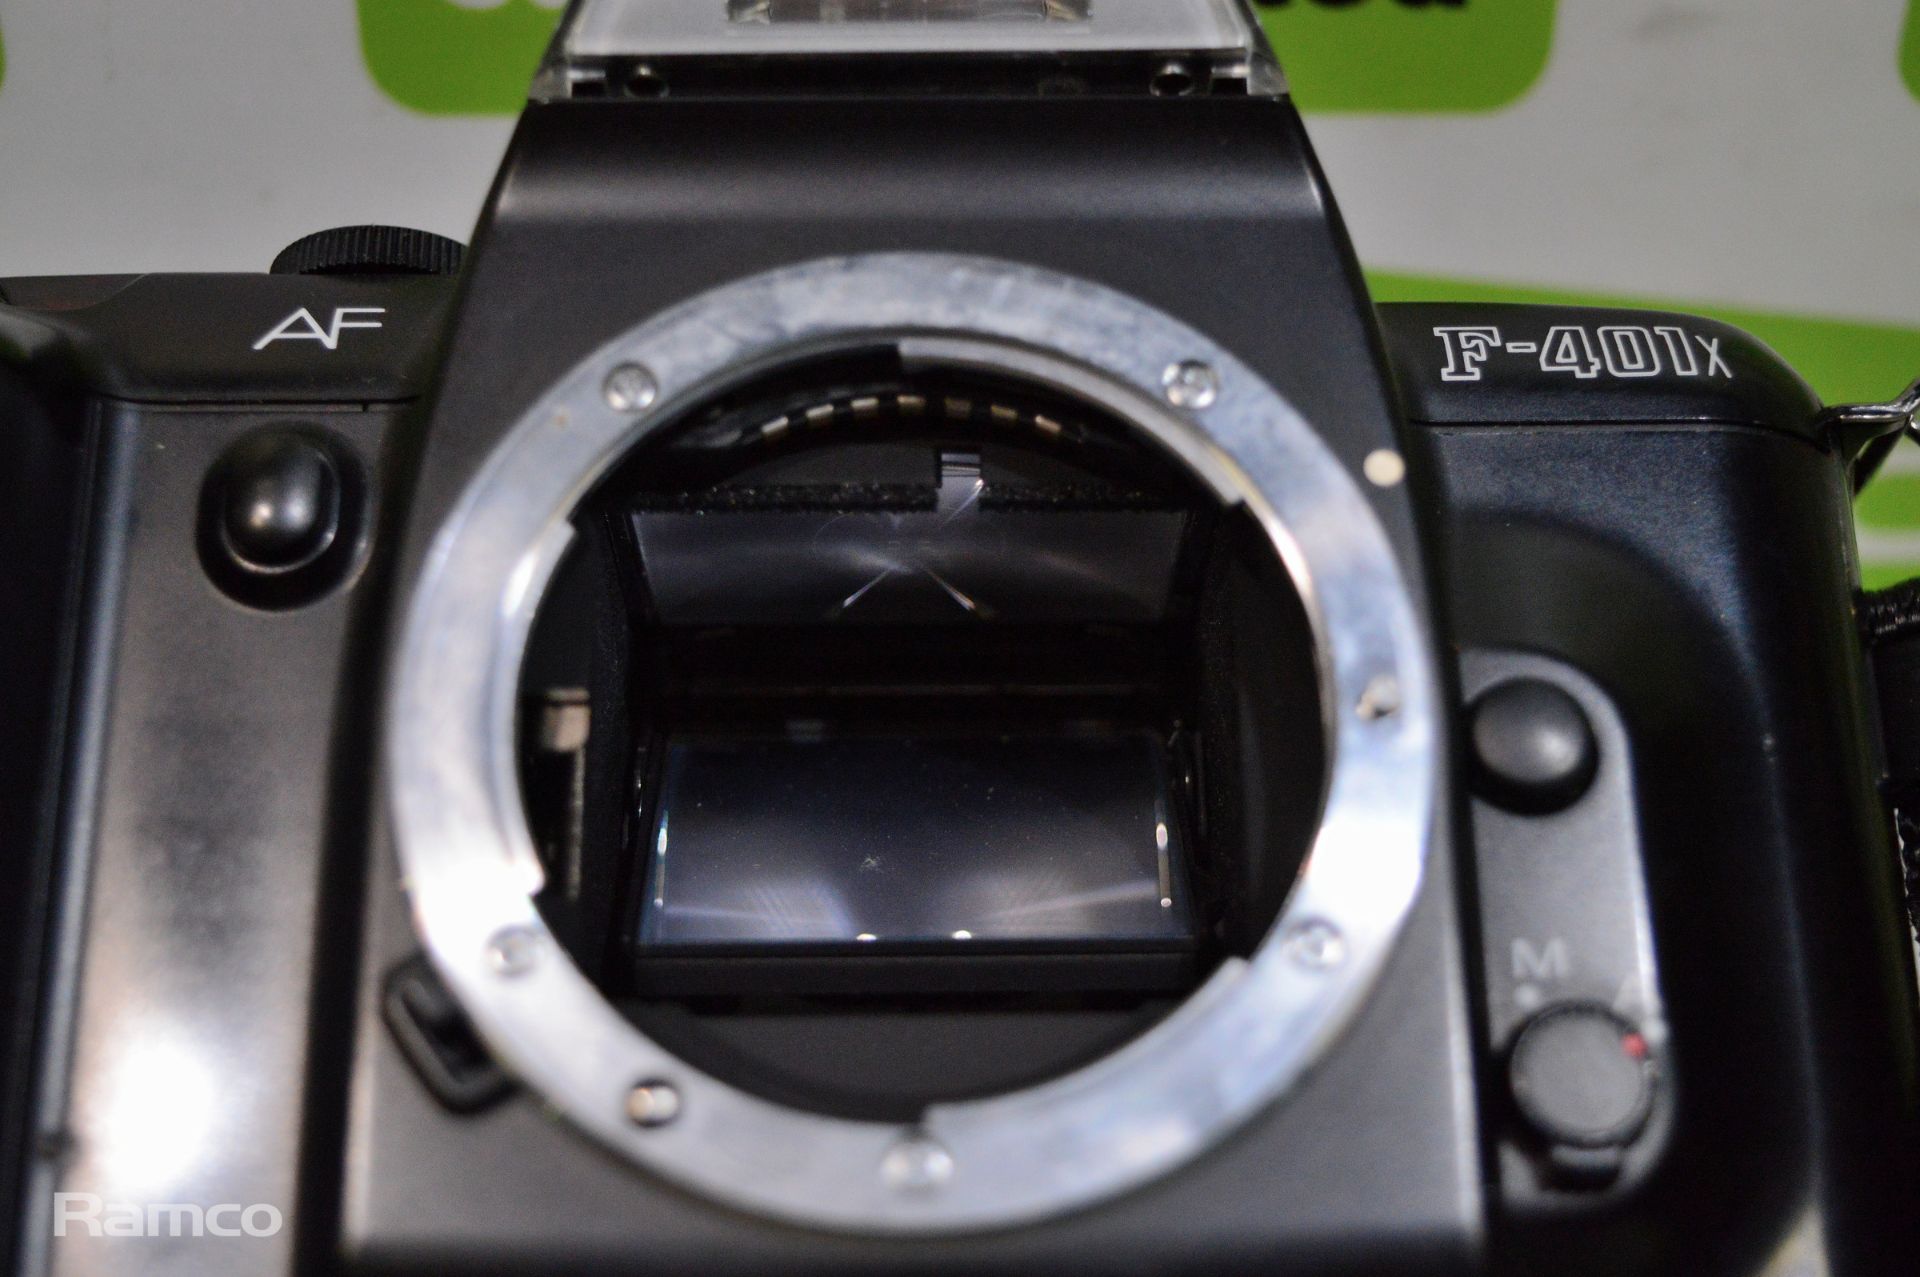 Nikon AF F-401x still camera body - Image 8 of 8